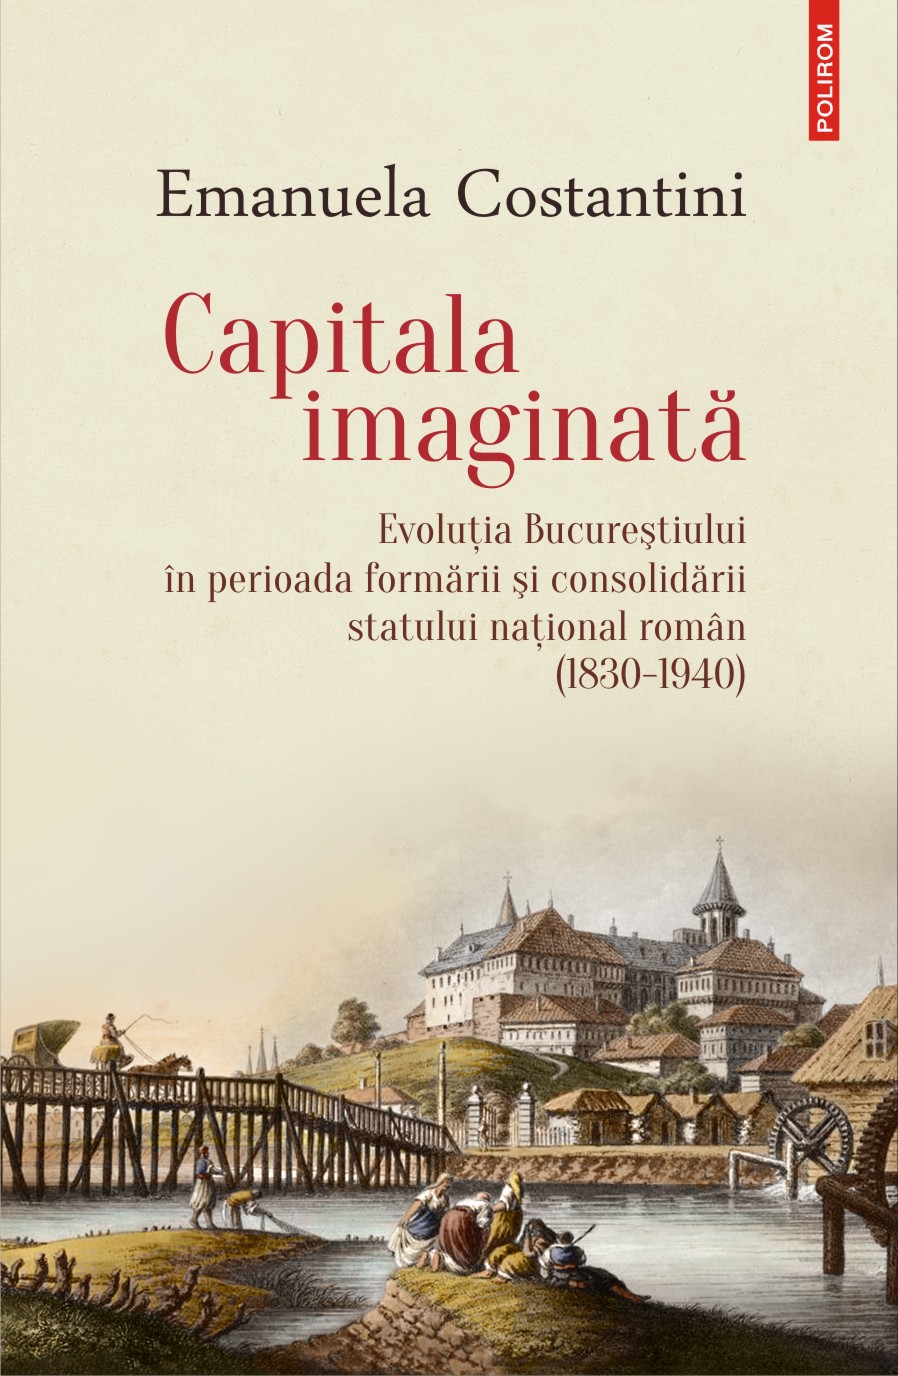 Capitala imaginata | Emanuela Costantini carturesti.ro Arta, arhitectura